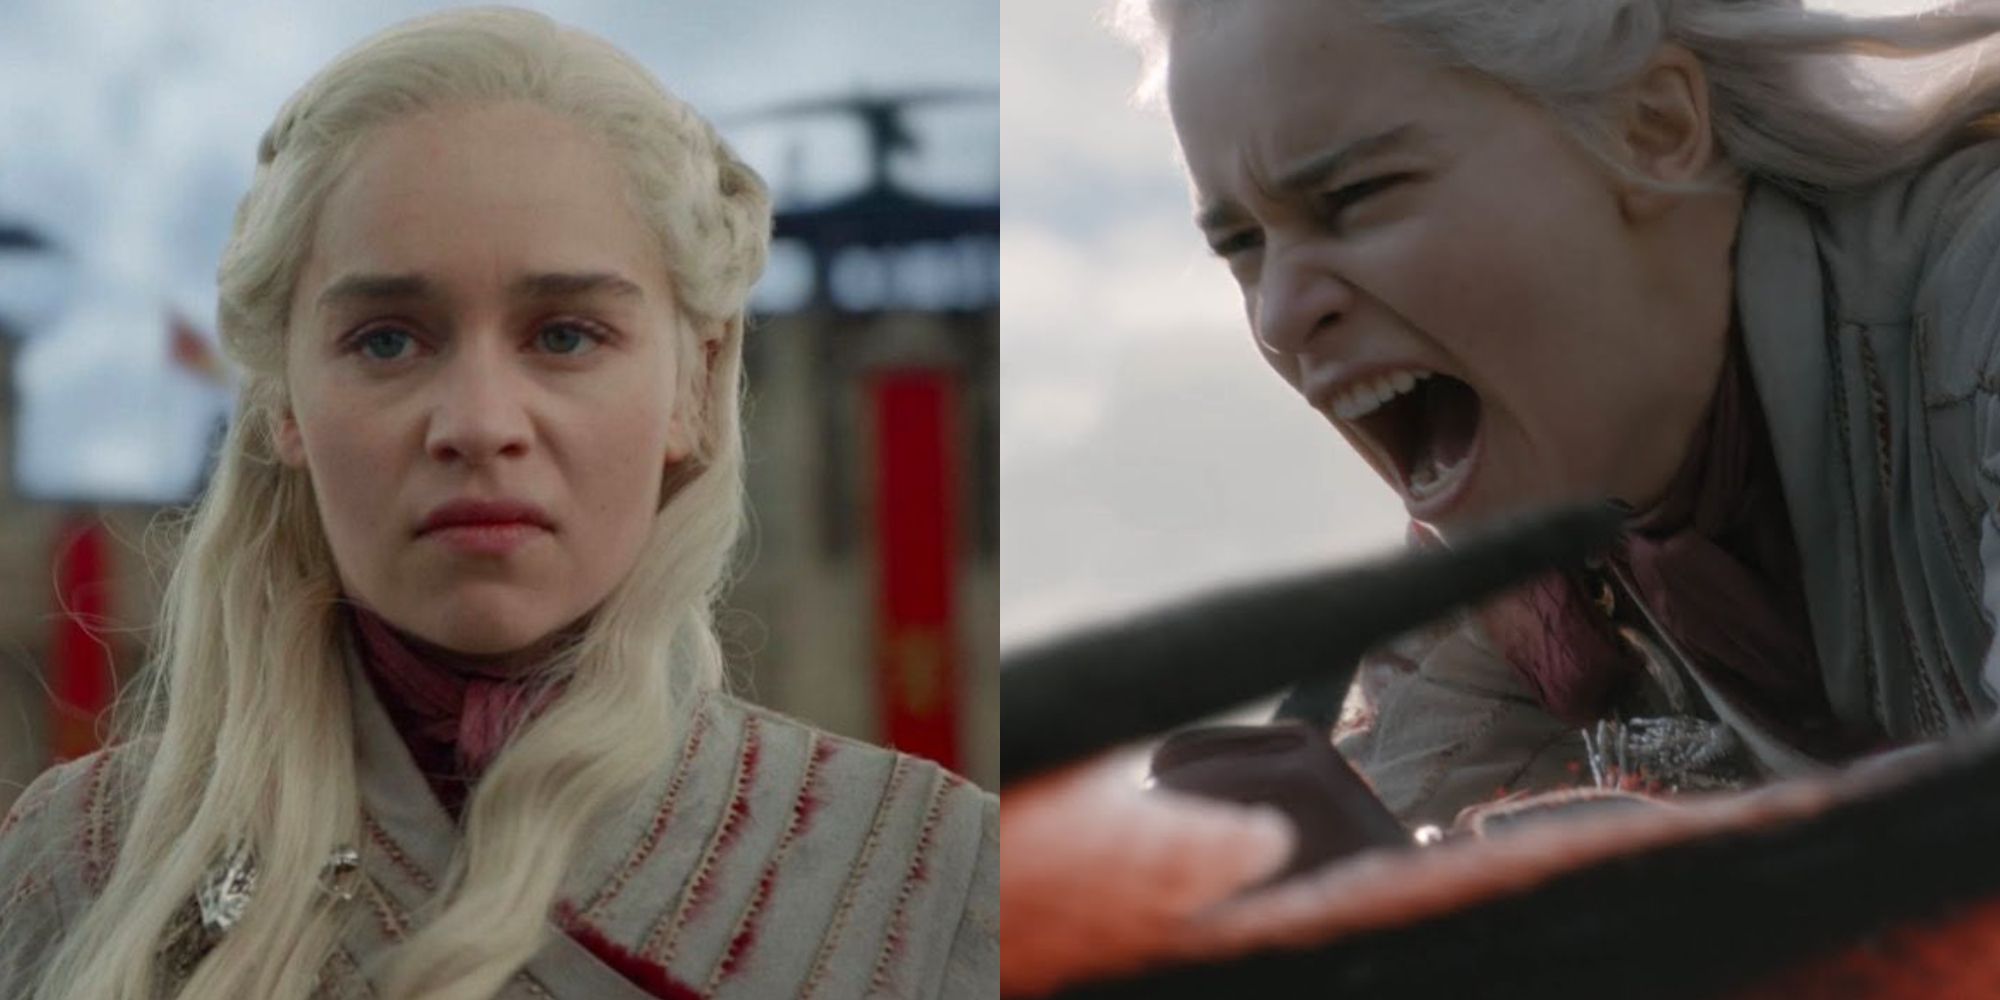 Split image of Daenerys Targaryen in Game of Thrones